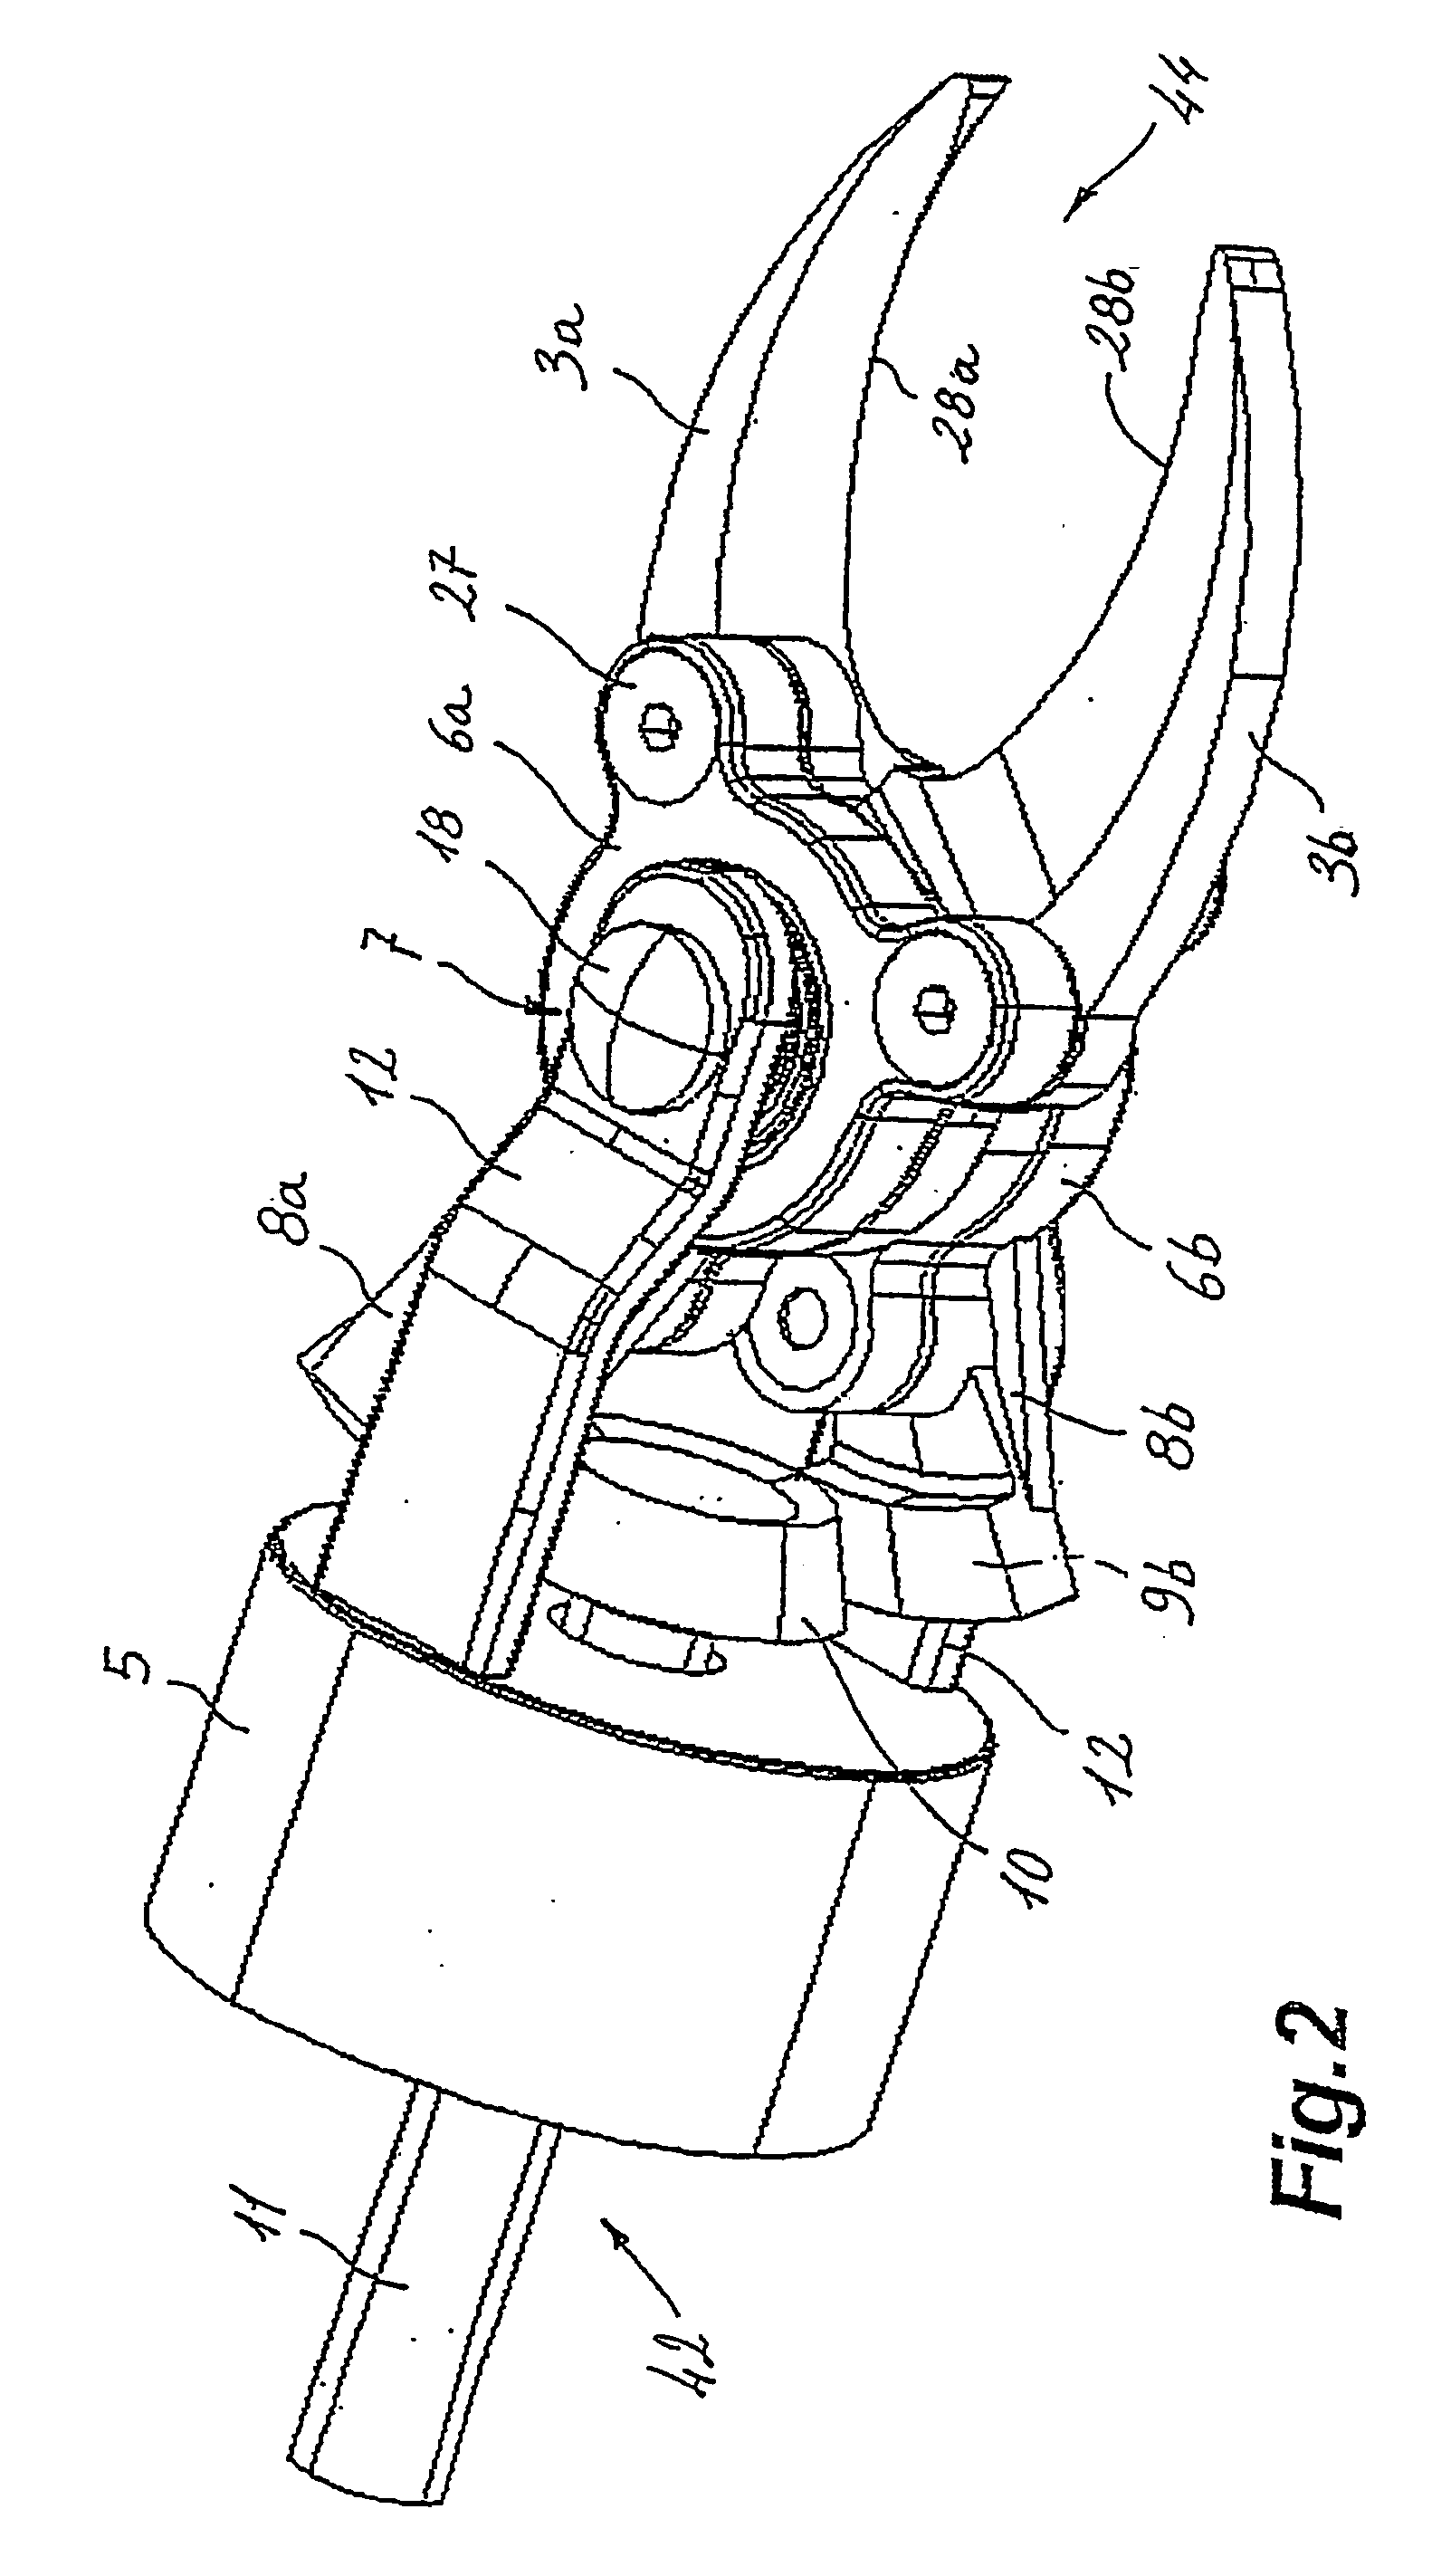 Portable motor-powered shears